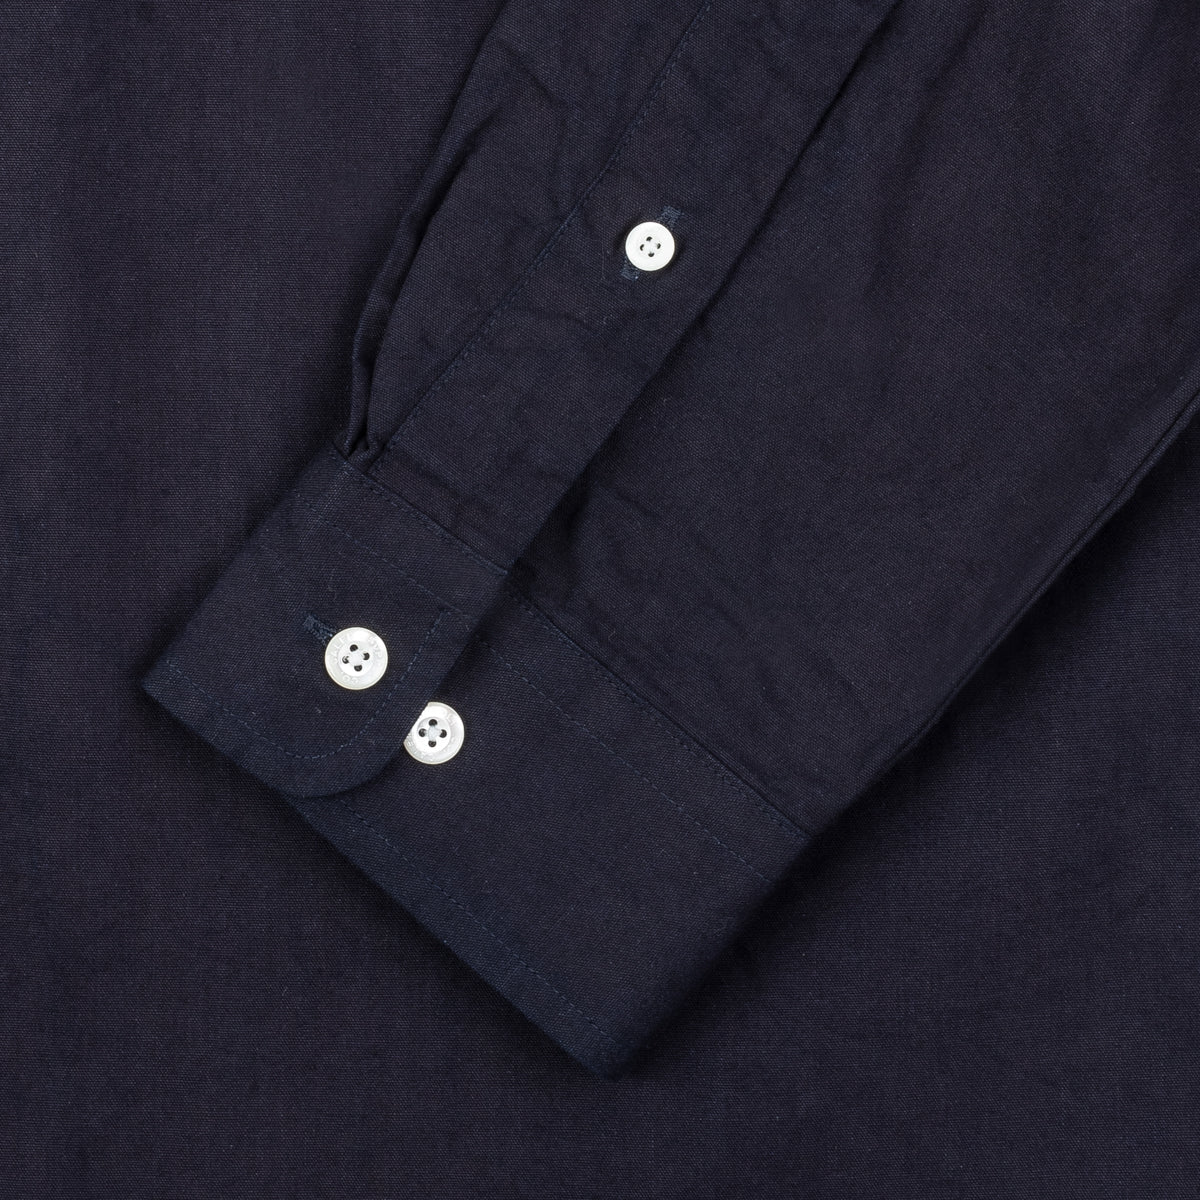 Chambray Long Sleeve Shirt - Indigo/Indigo